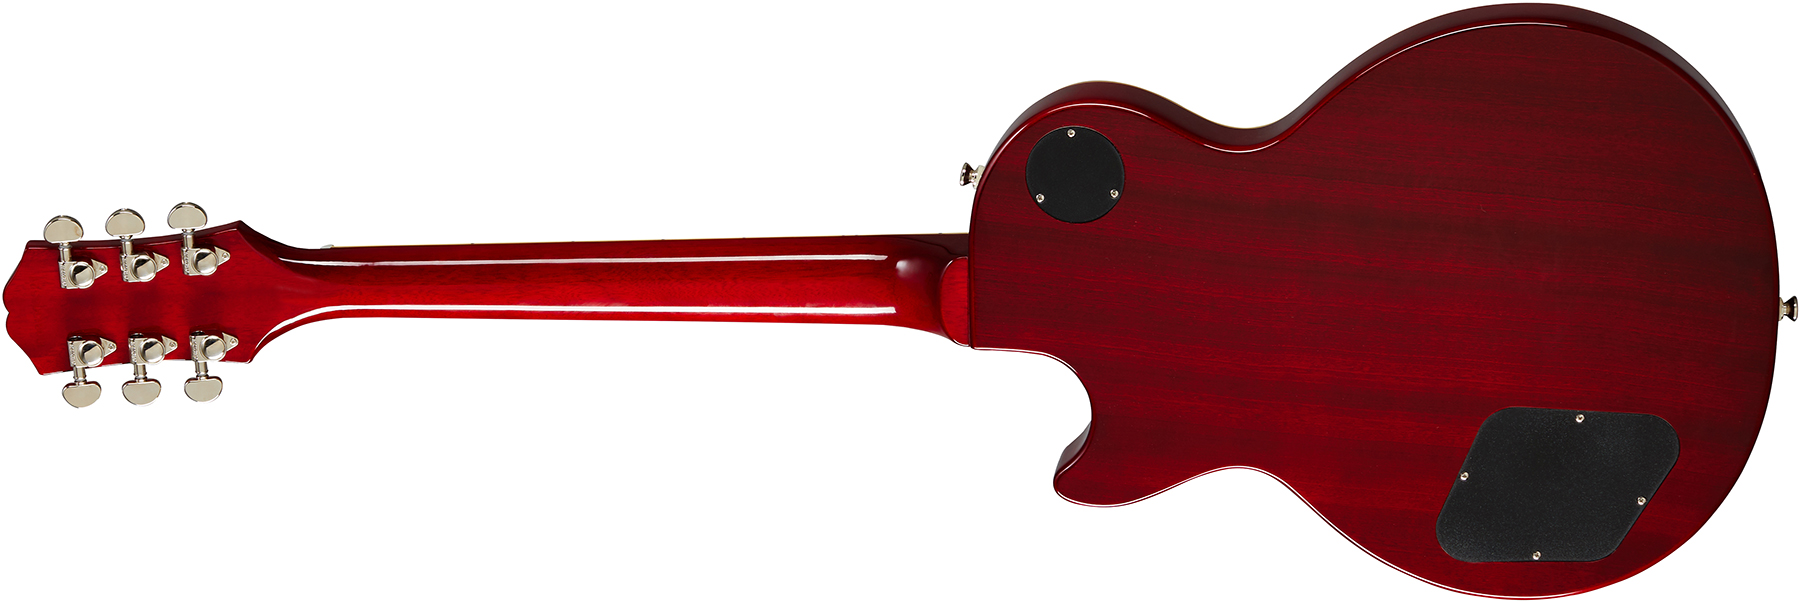 Epiphone Les Paul Standard 60s Gaucher 2h Ht Rw - Iced Tea - E-Gitarre für Linkshänder - Variation 1